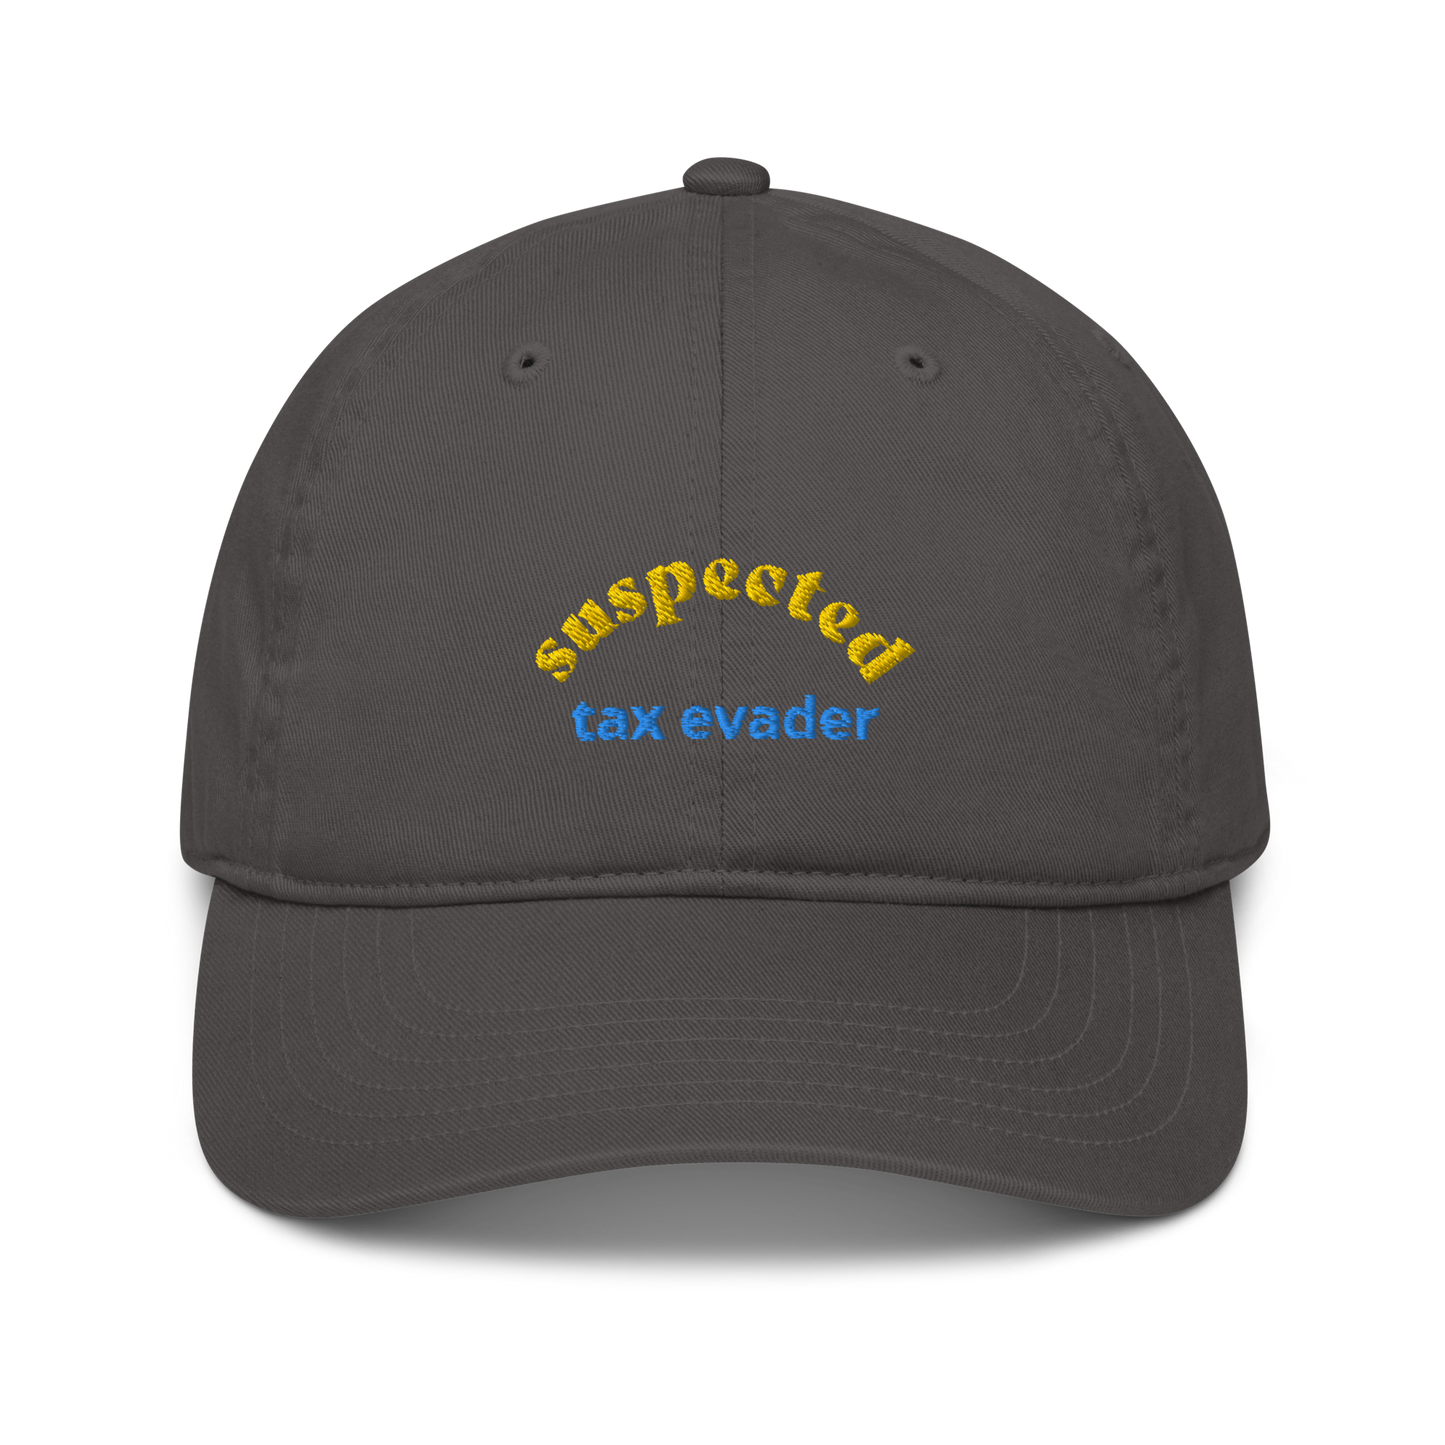 suspected tax evader cap